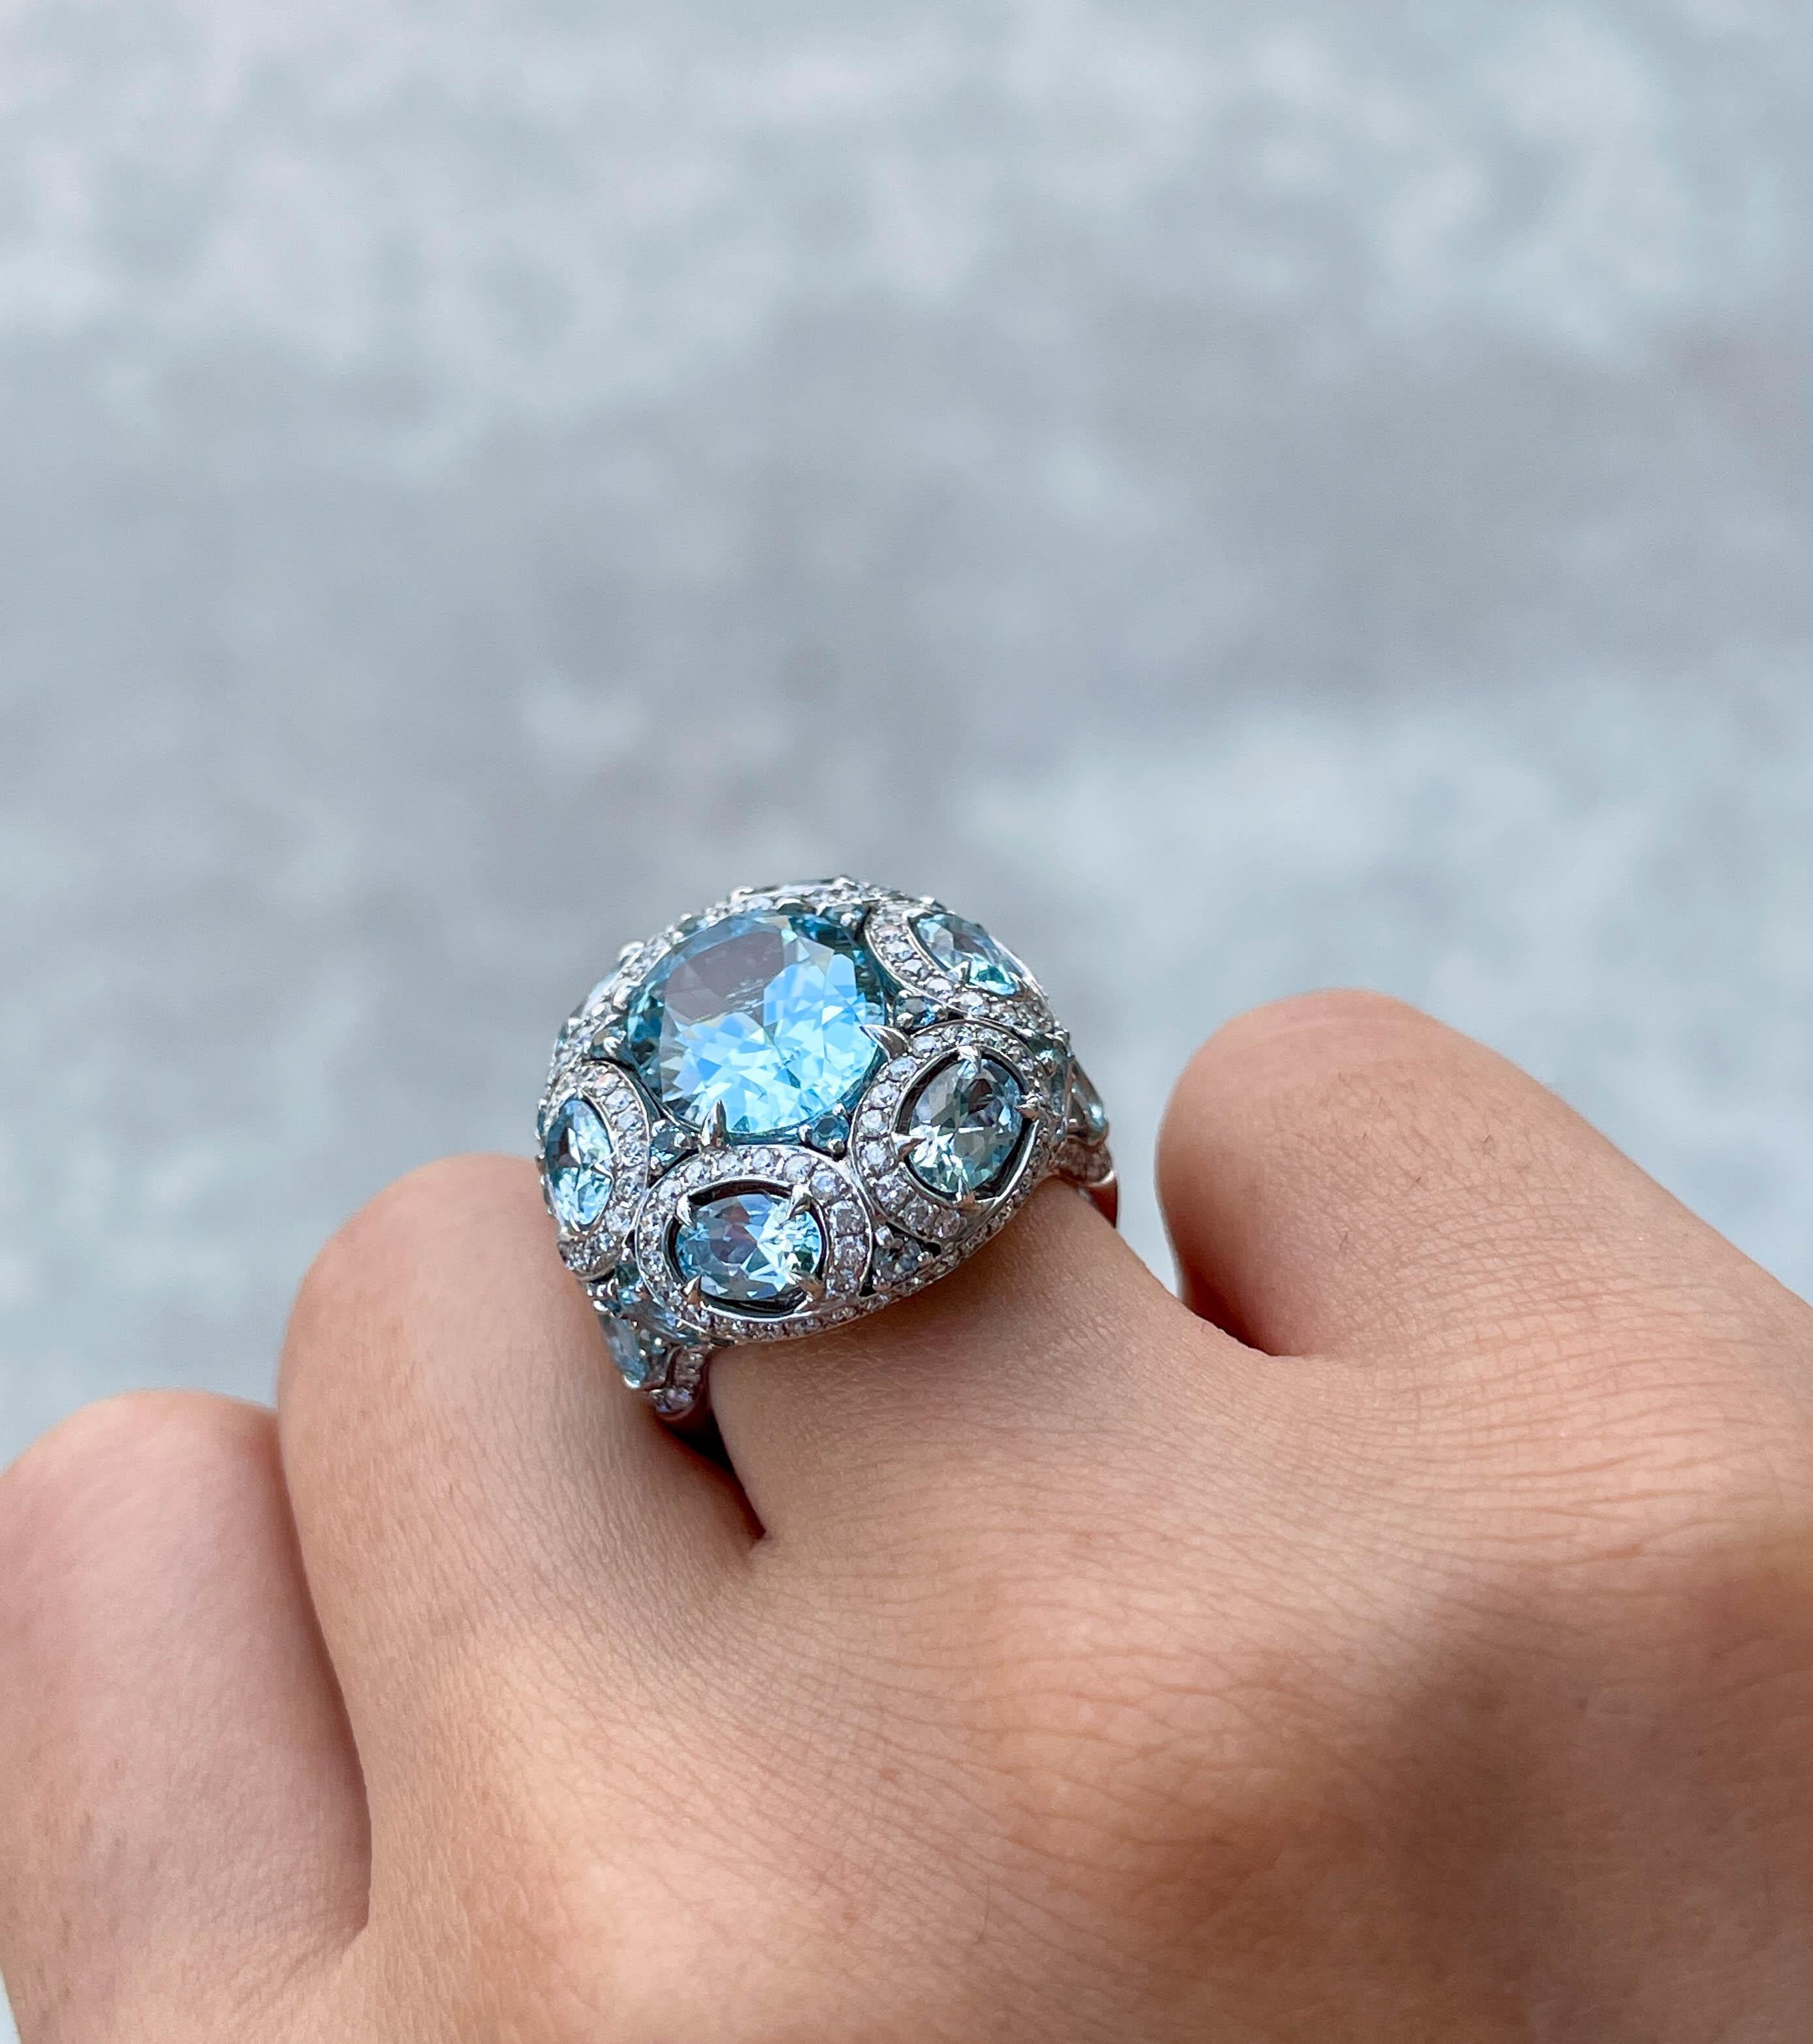 Jay Feder 18k White Gold Diamond Blue Topaz Ring In Good Condition For Sale In Boca Raton, FL